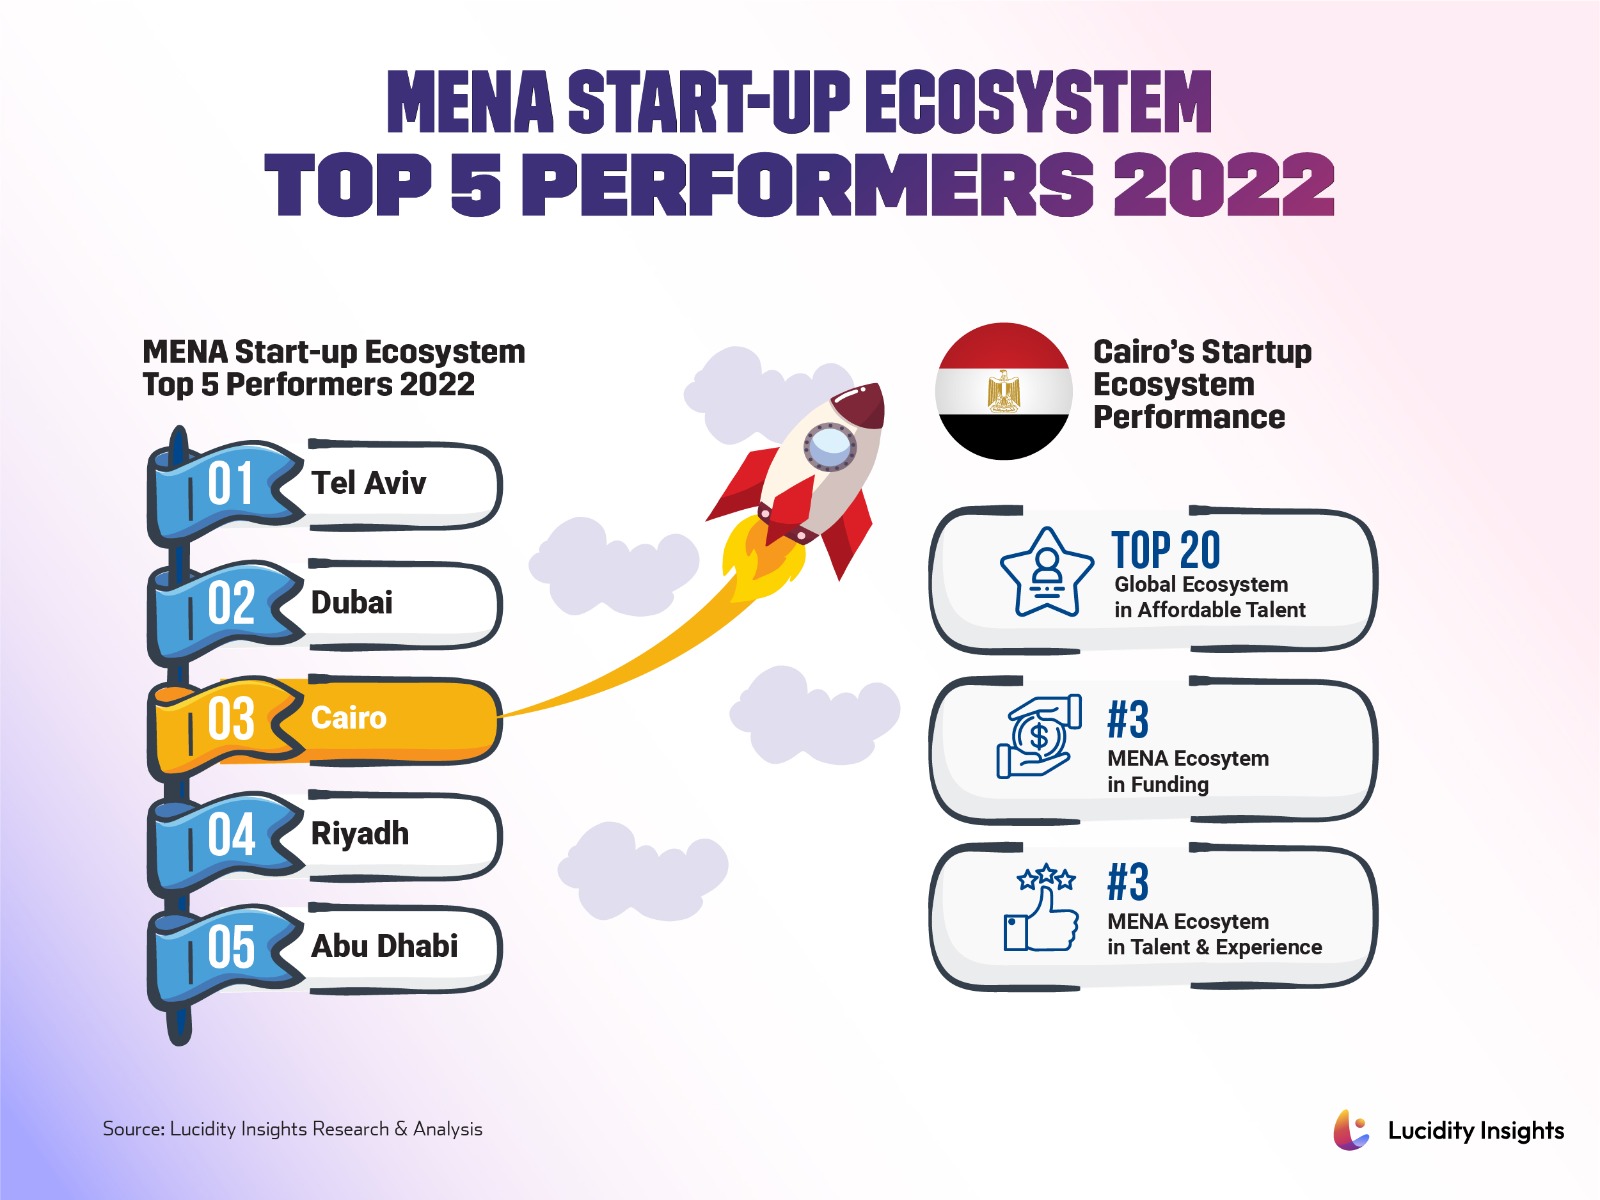 MENA Start-up Ecosystem Top 5 Performers 2022